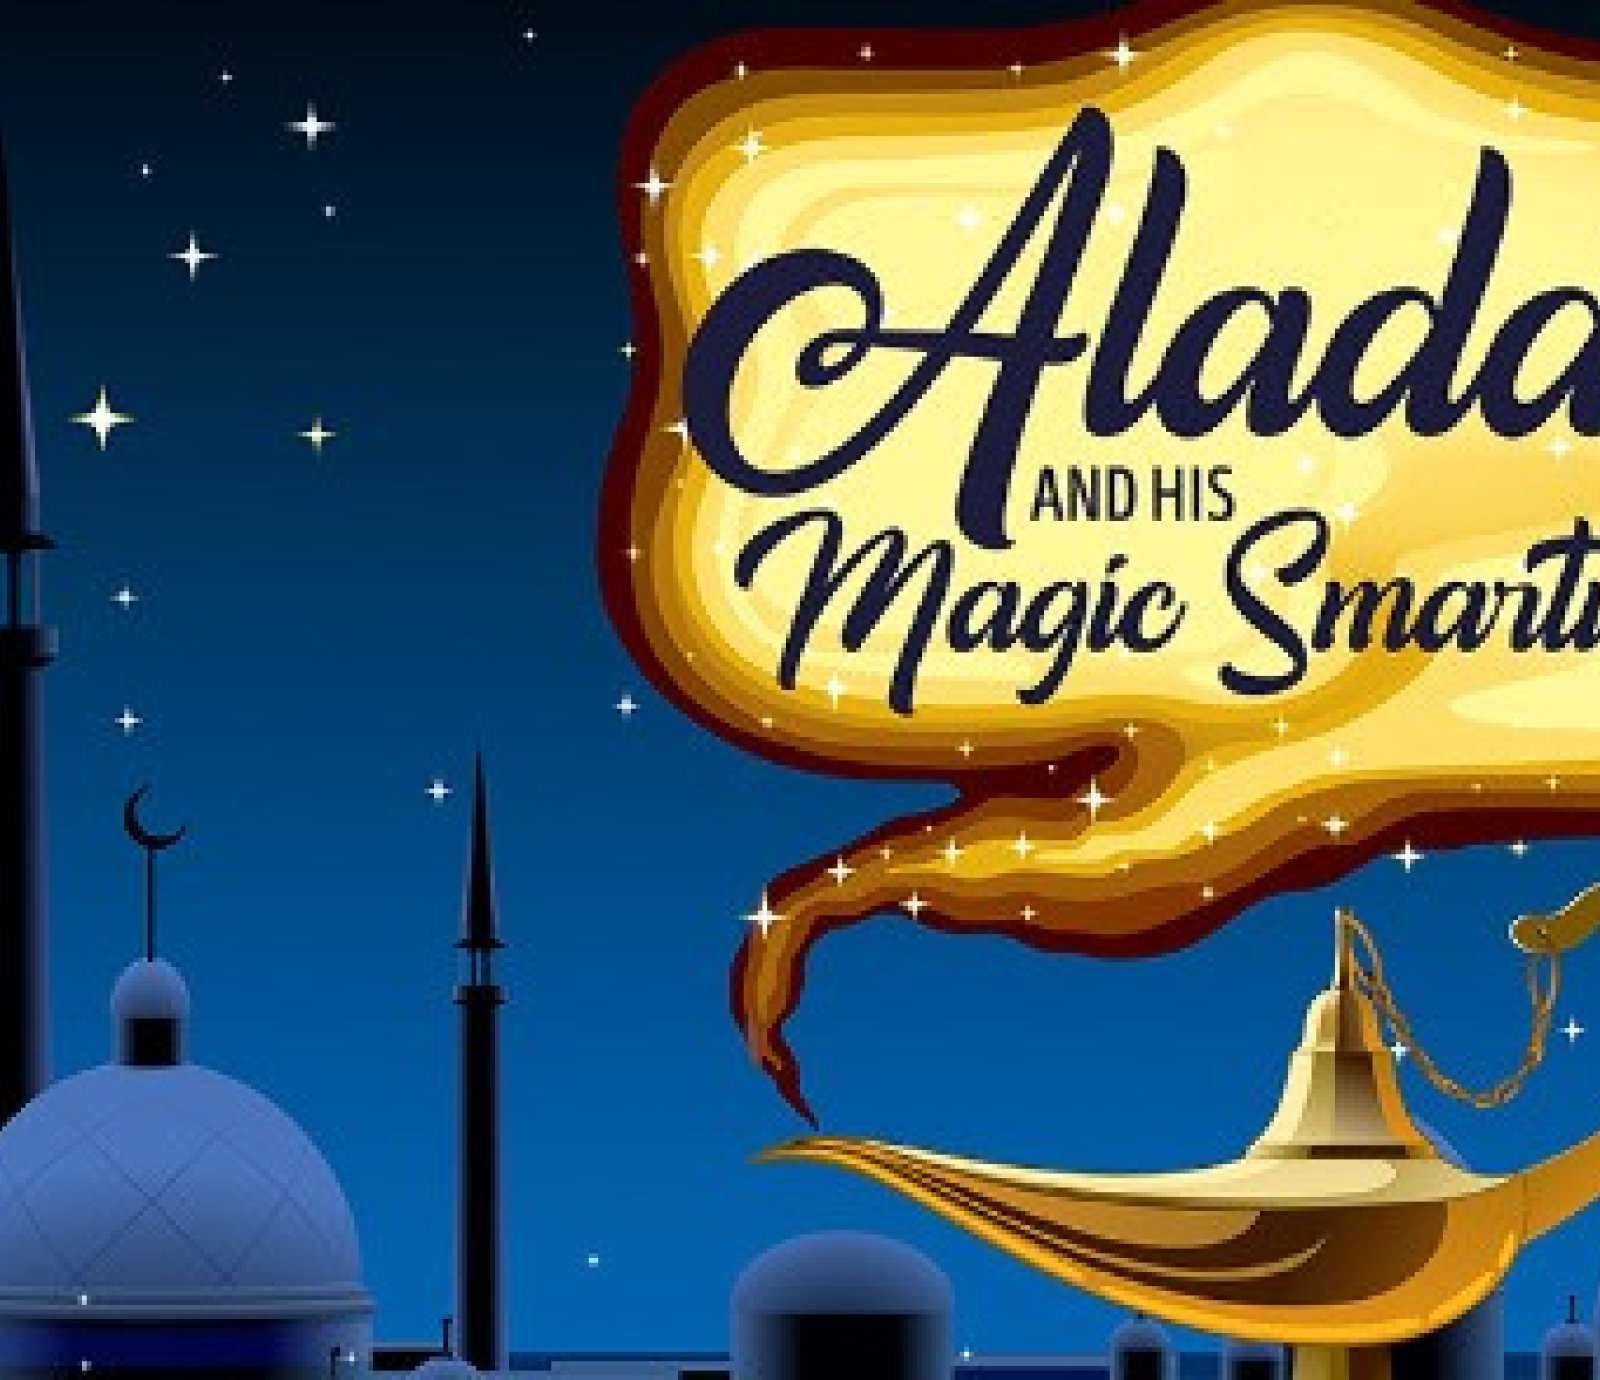 Aladdin and his Magic Smartwatch